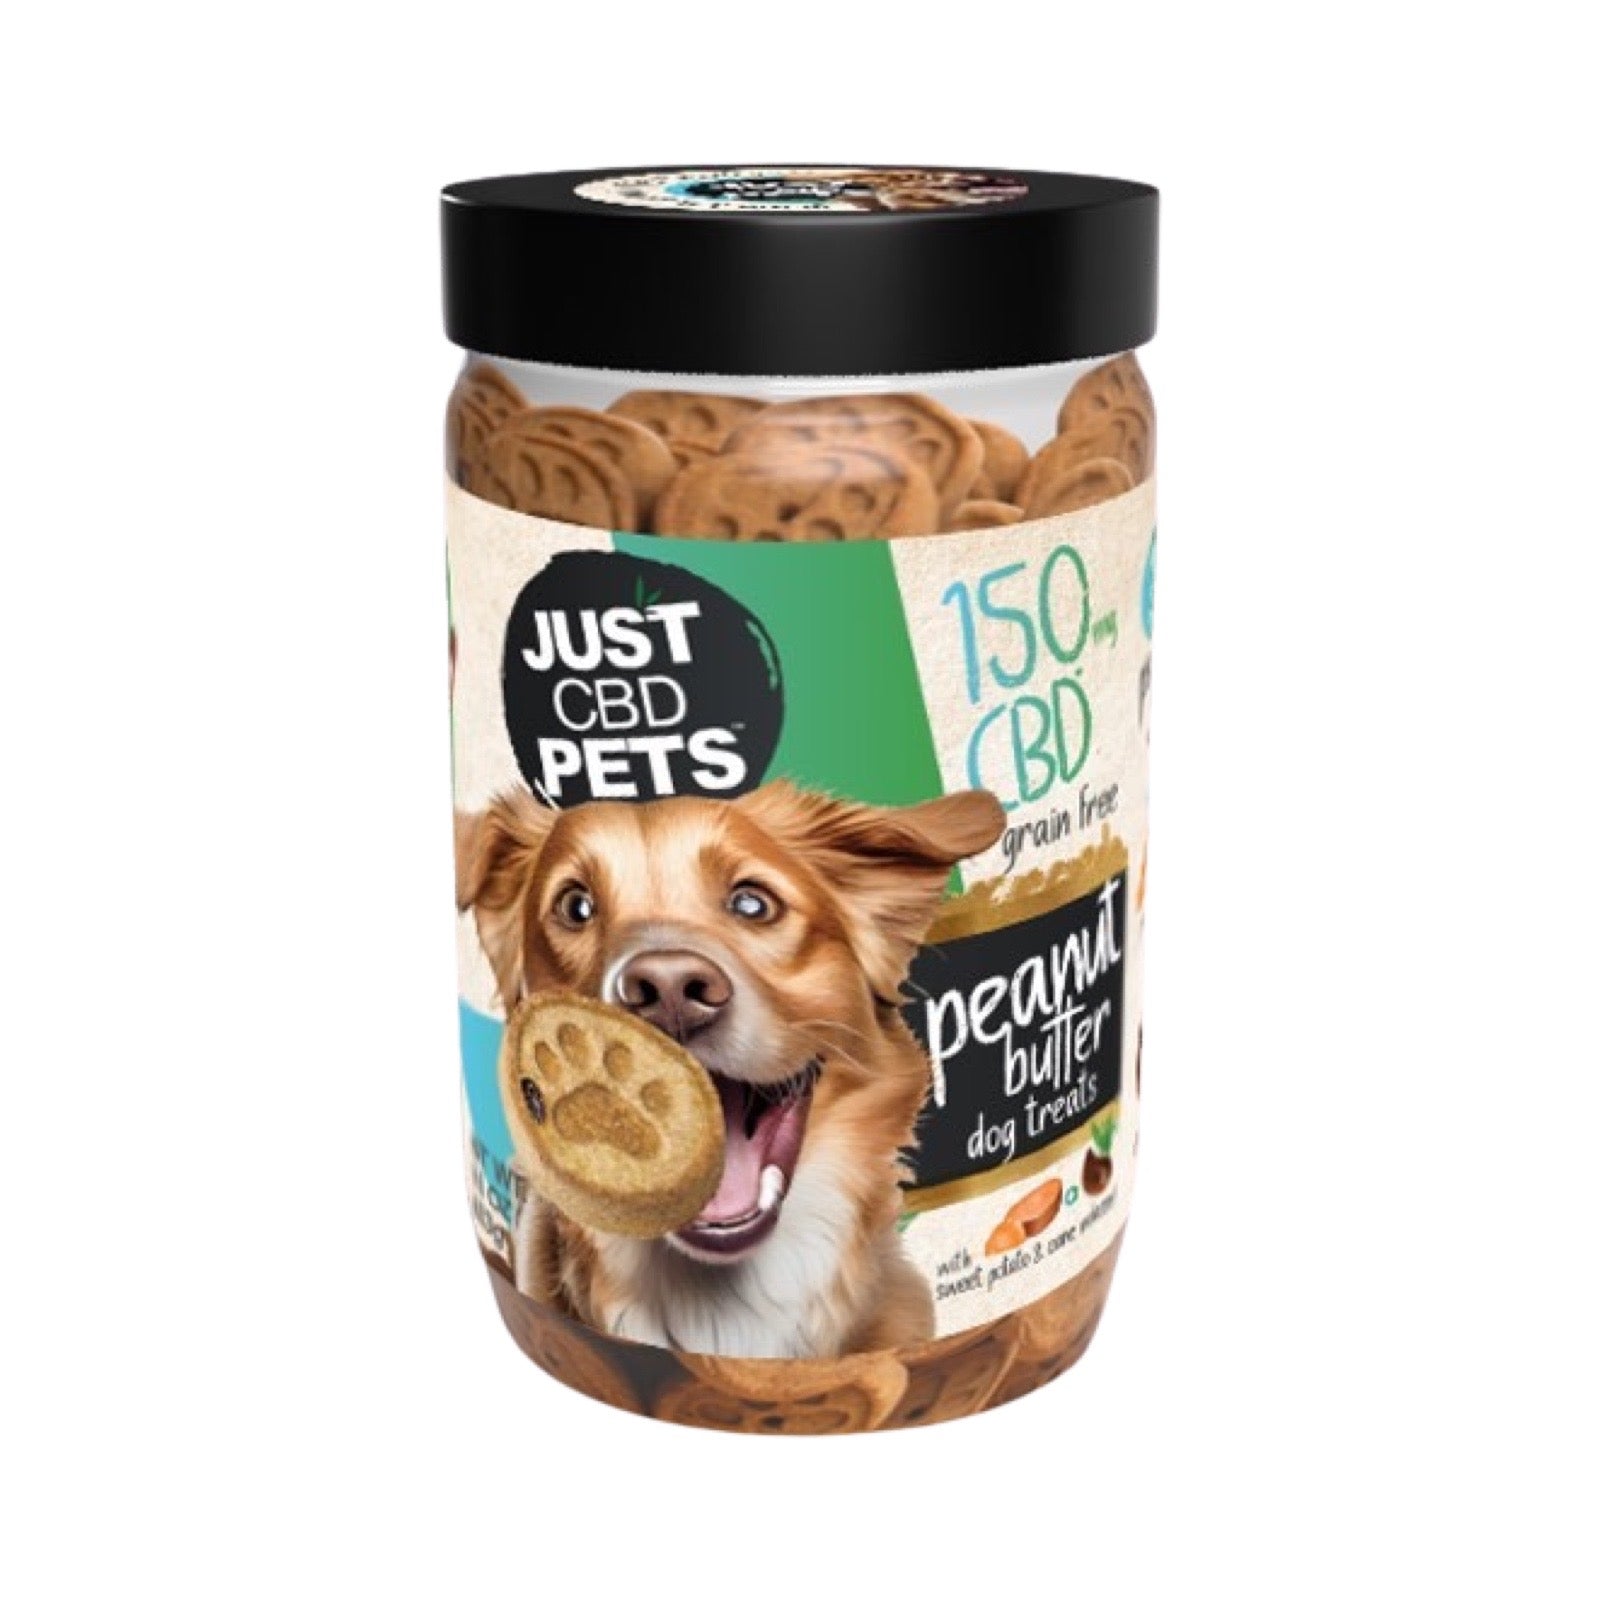 Peanut Butter Dog Treats (Sweet Potato & Cane Molasses) 150mg